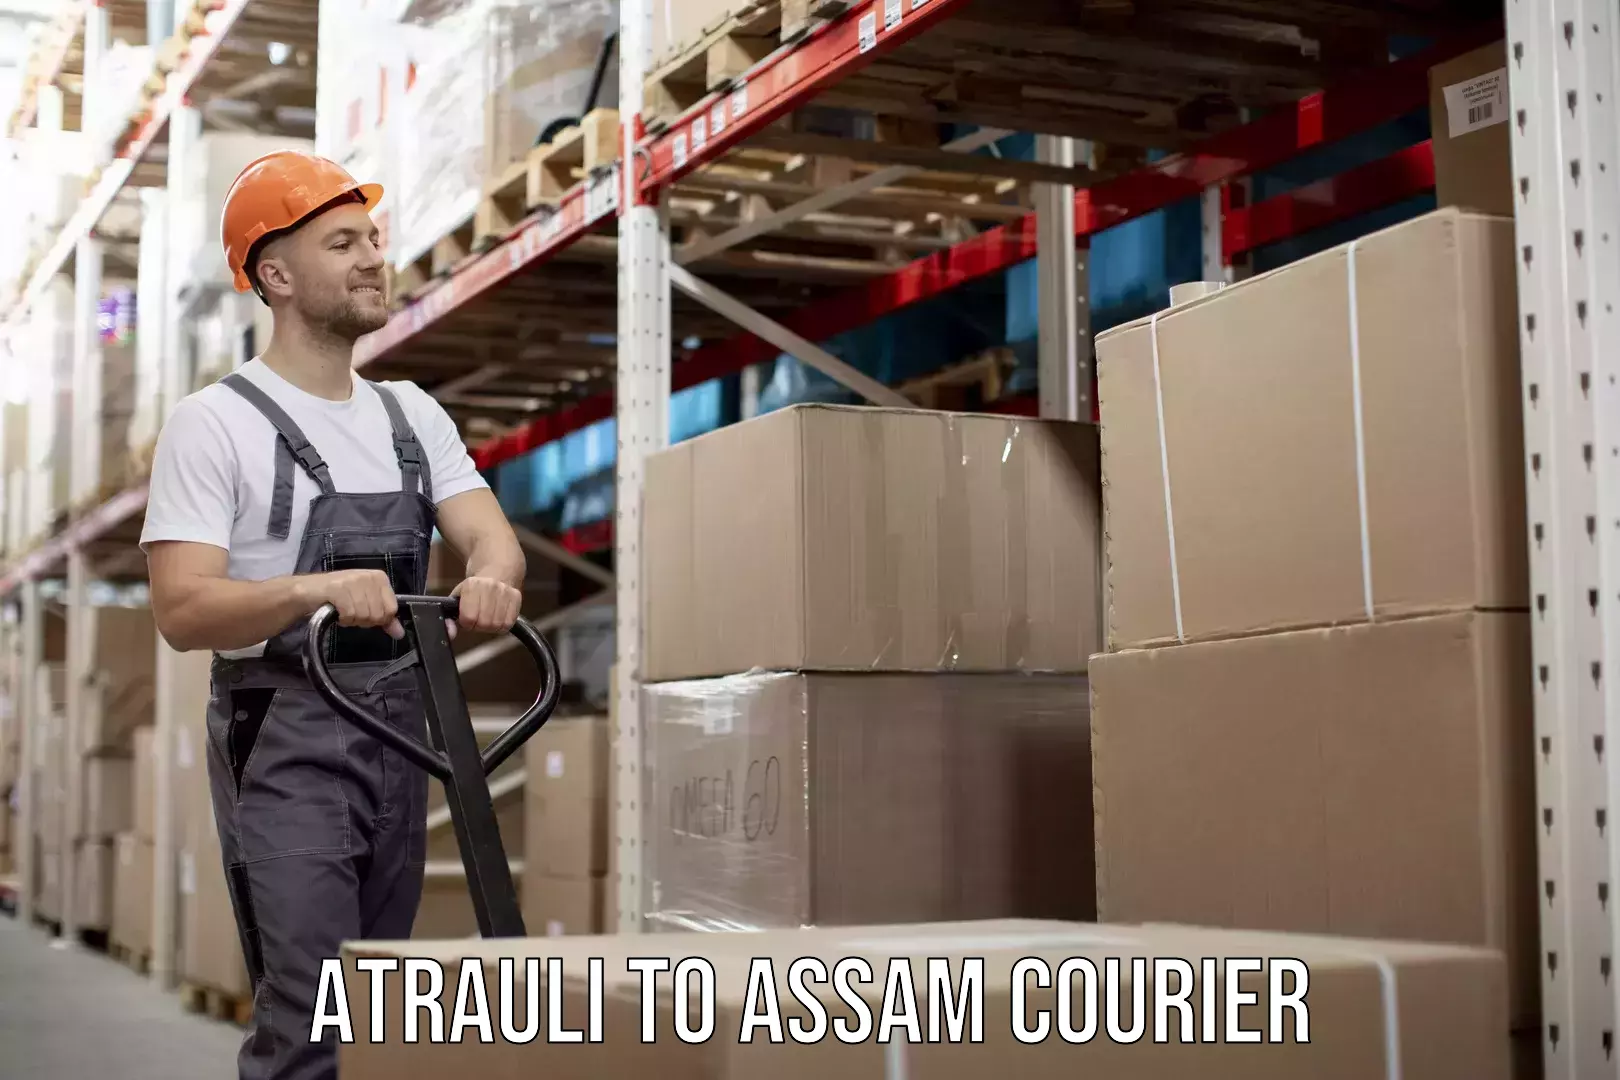 Professional courier handling Atrauli to Assam